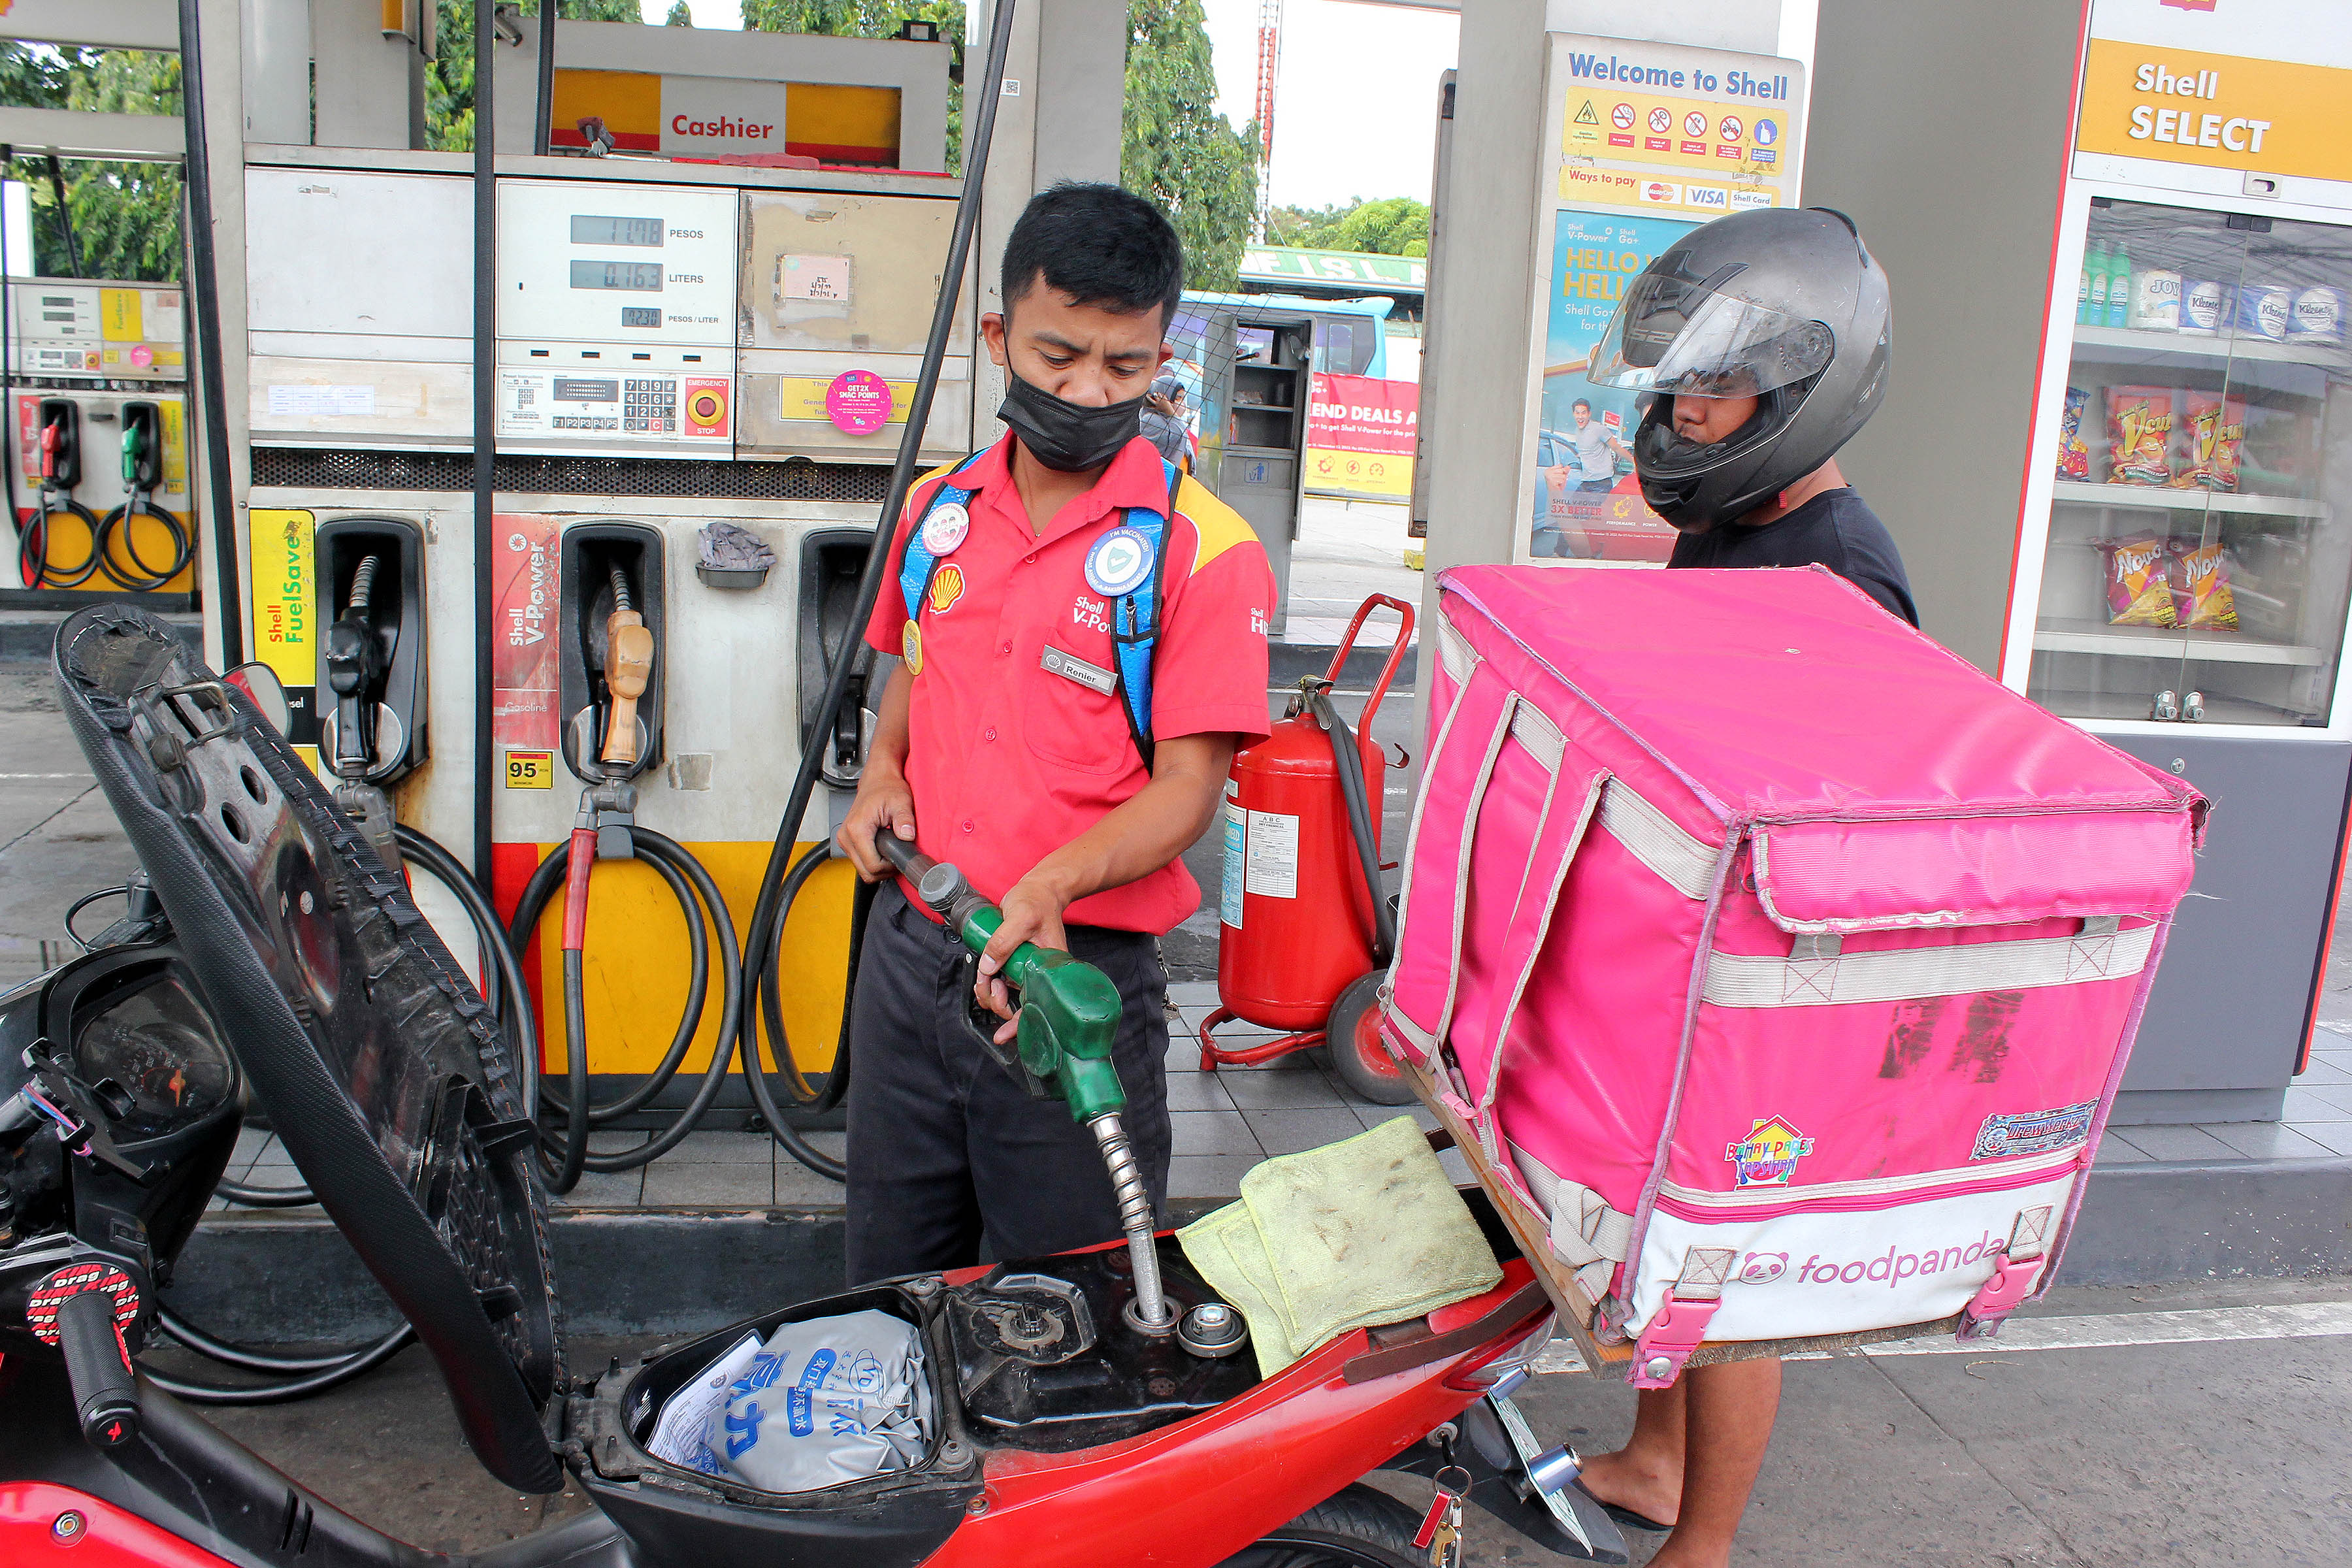 Oil prices cut Photos Philippine News Agency